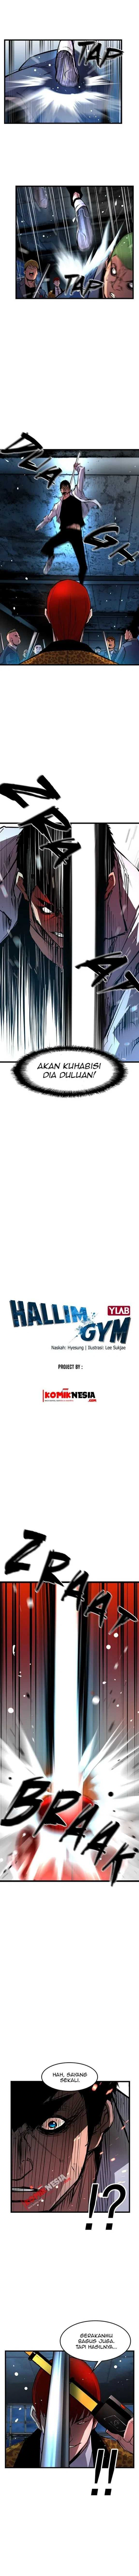 Hallym Gymnasium Chapter 18